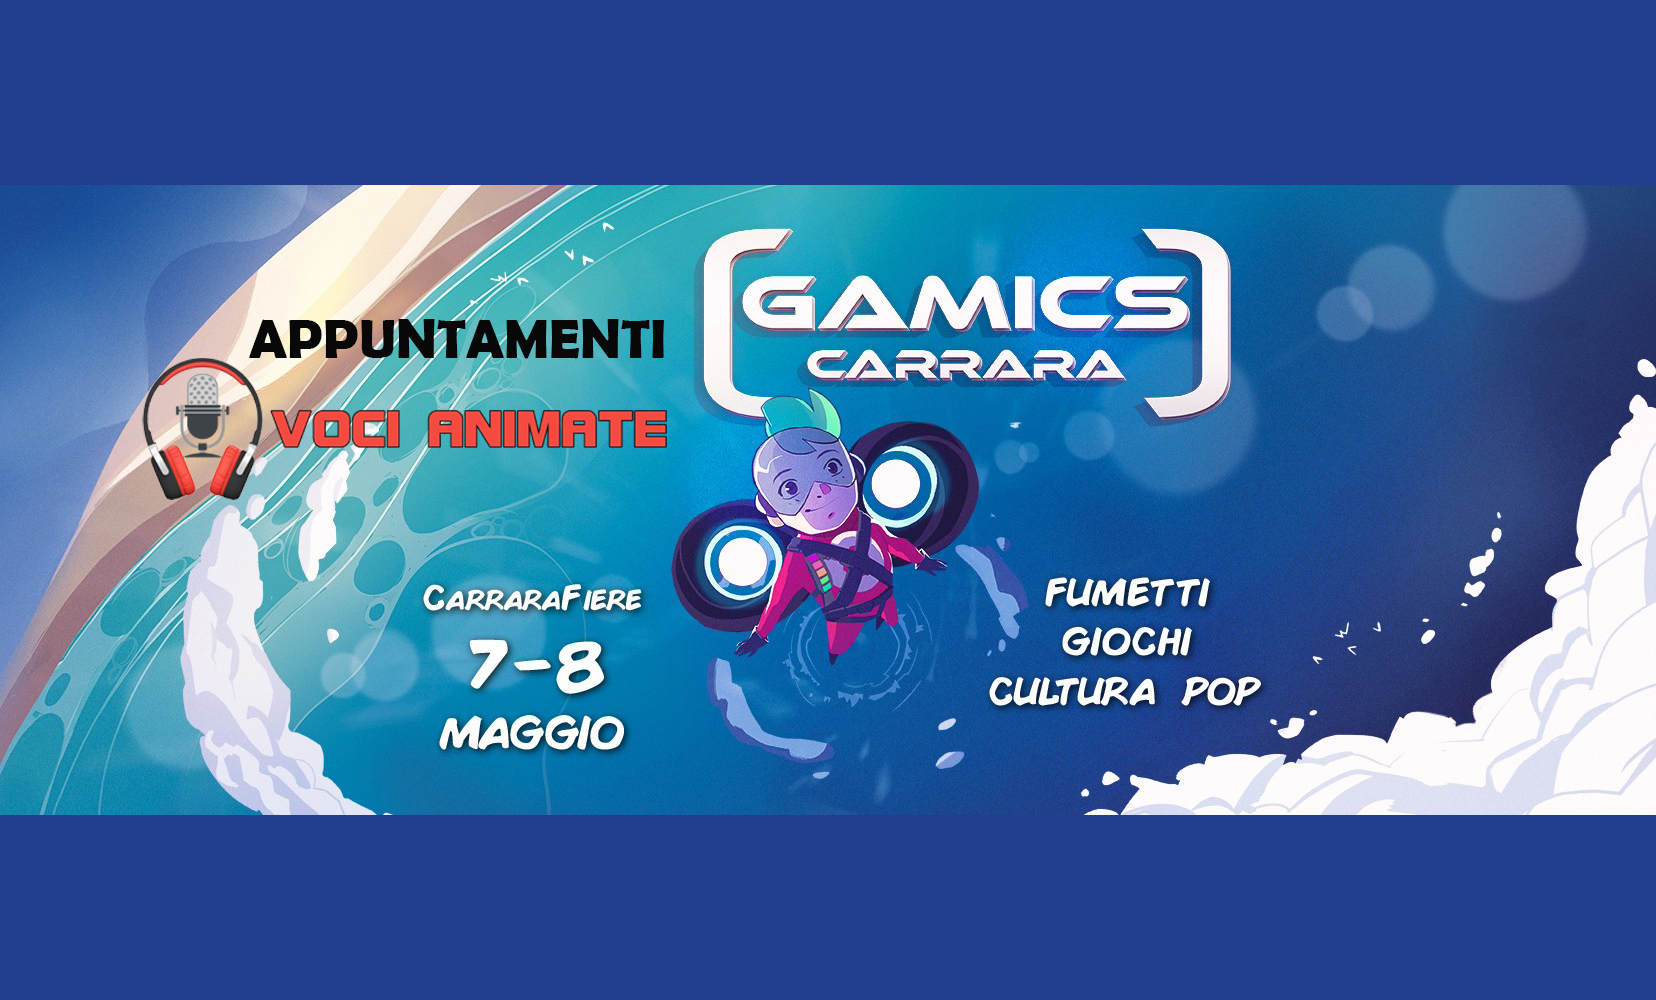 Gamics Carrara 2022